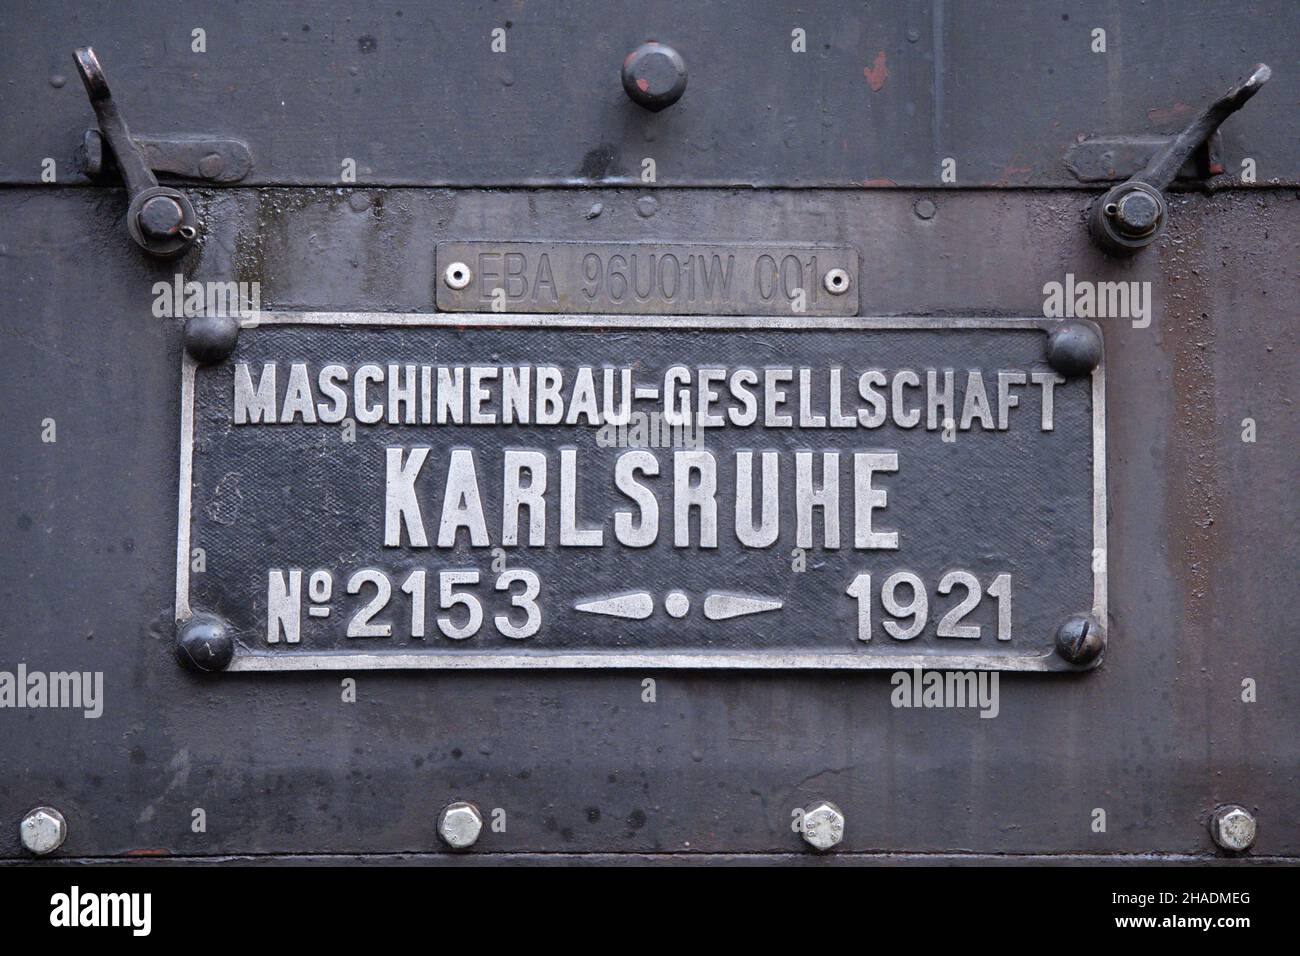 Maschinenbau-Gesellschaft Karlsruhe 1921, Locomotive Plate Stock Photo